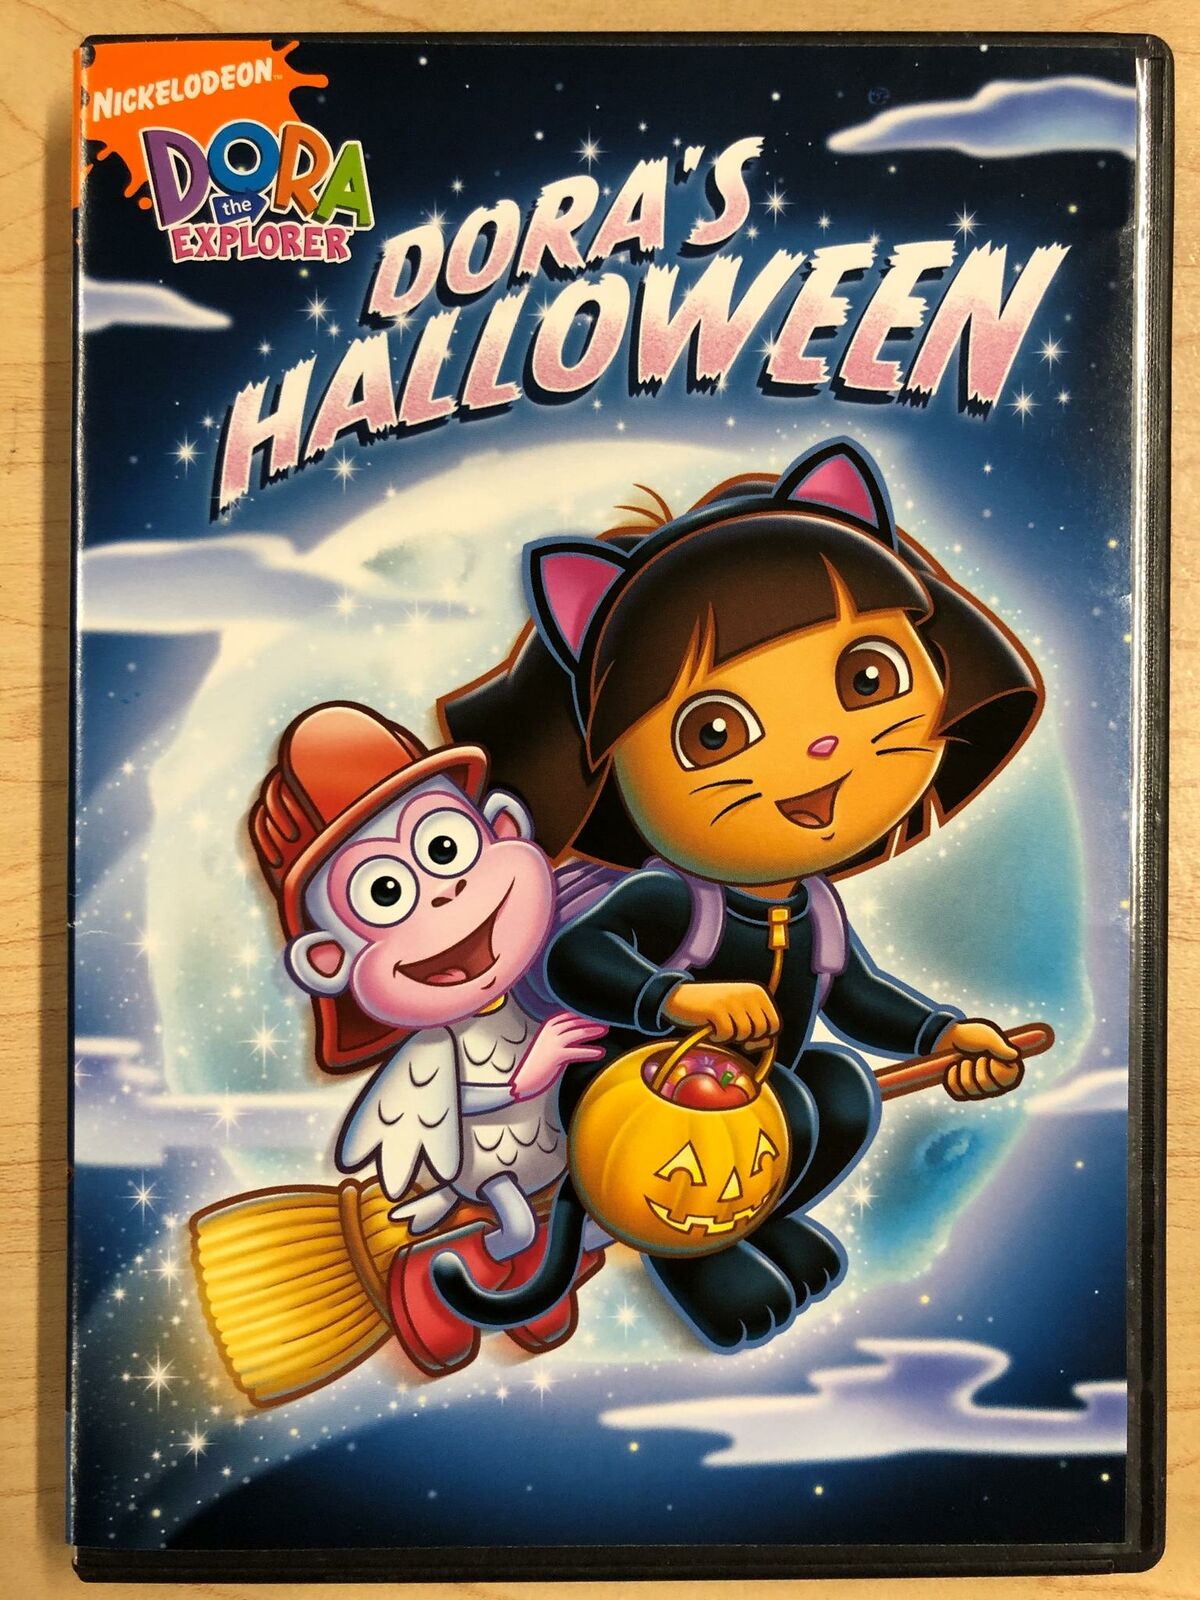 Dora the Explorer - Doras Halloween (DVD, 2004, Nickelodeon) - G0823